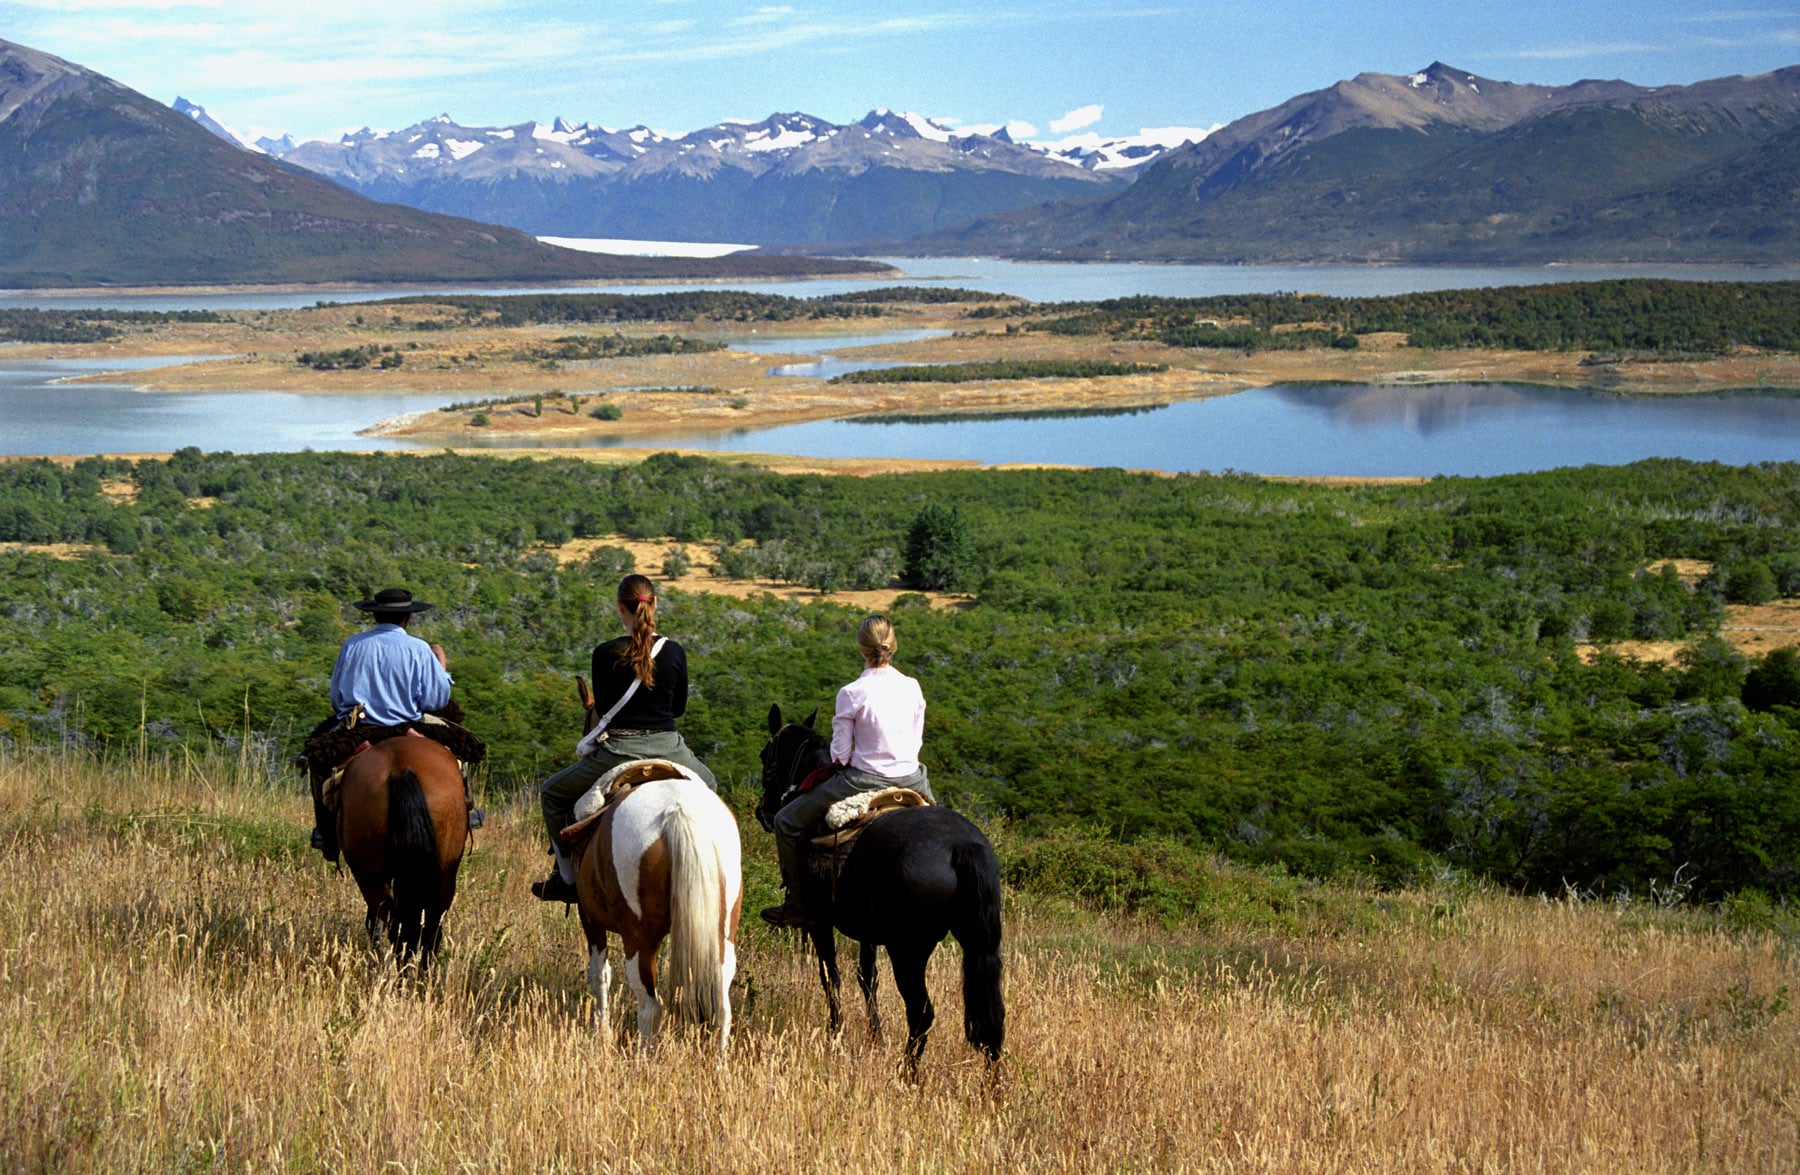 Patagonia como un Gaucho Qwerty Travel